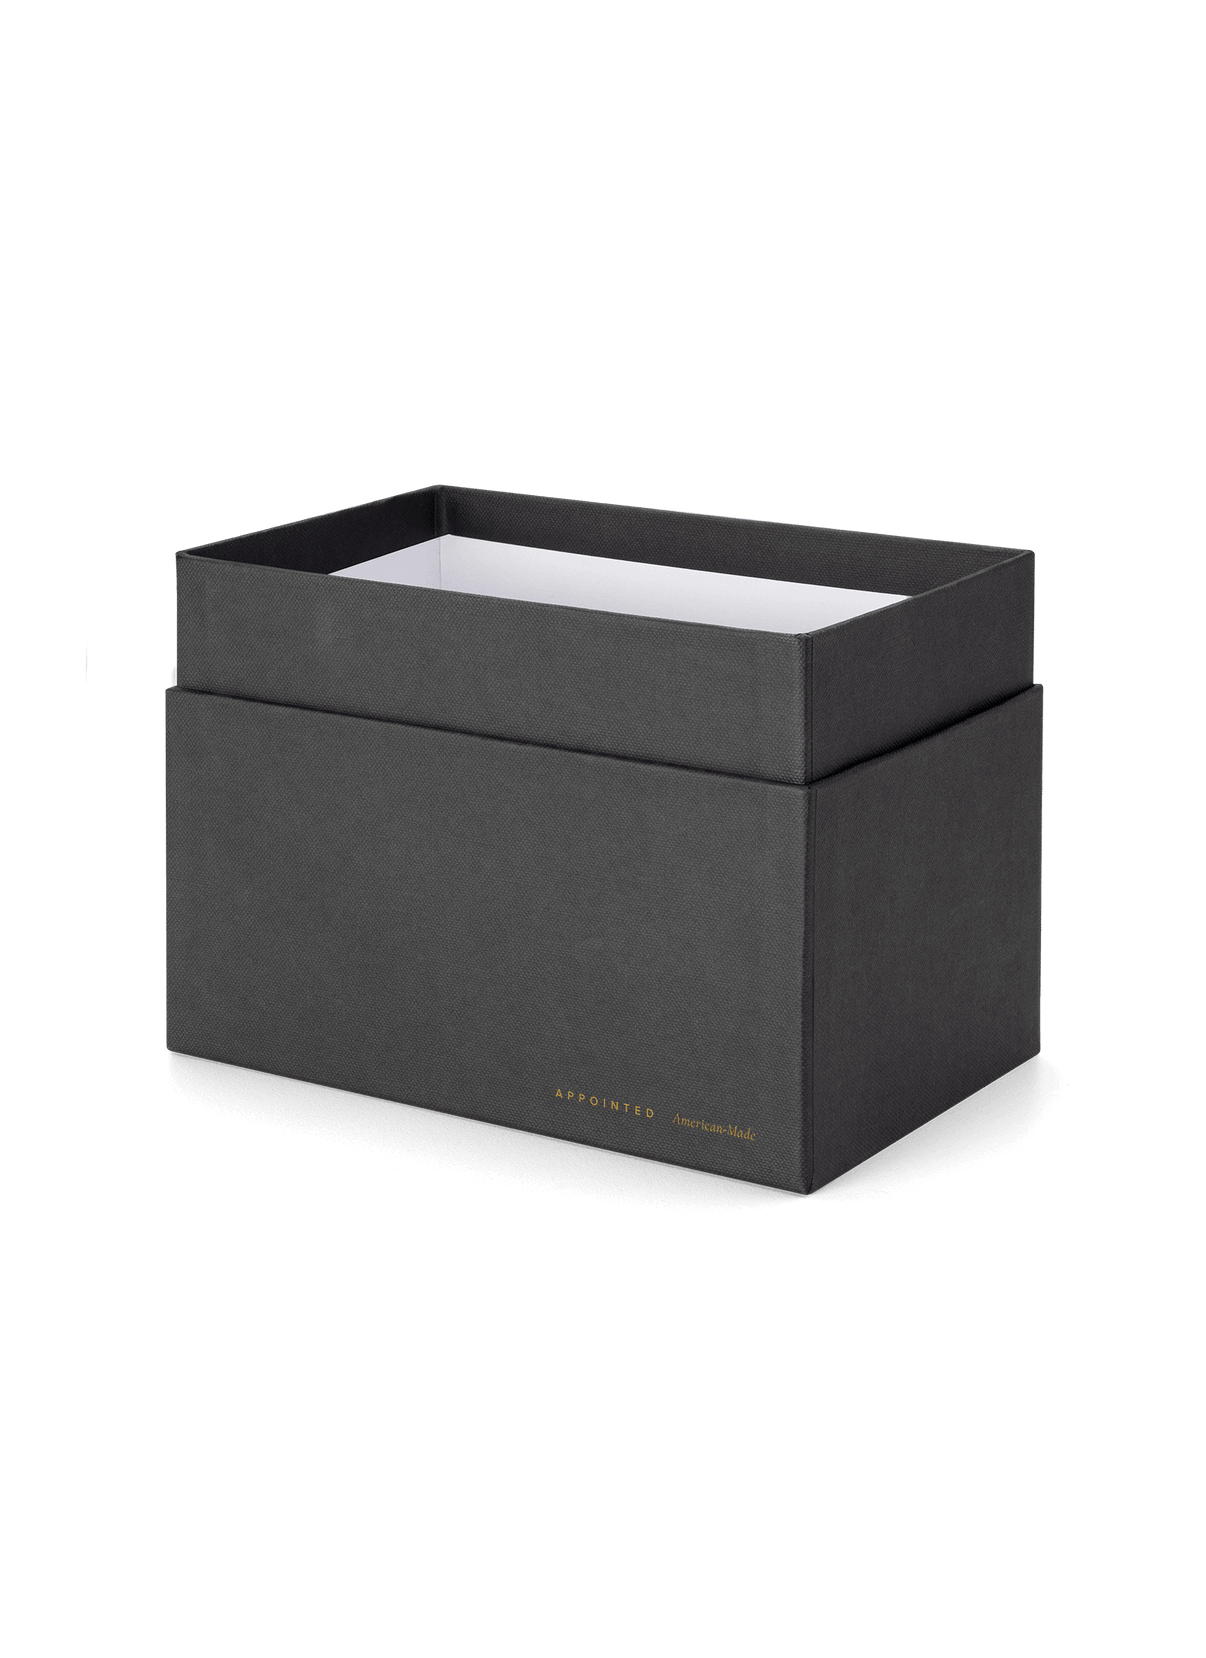 Storage Box Long Organization Separate Grid Organizer Box Eco-friendly